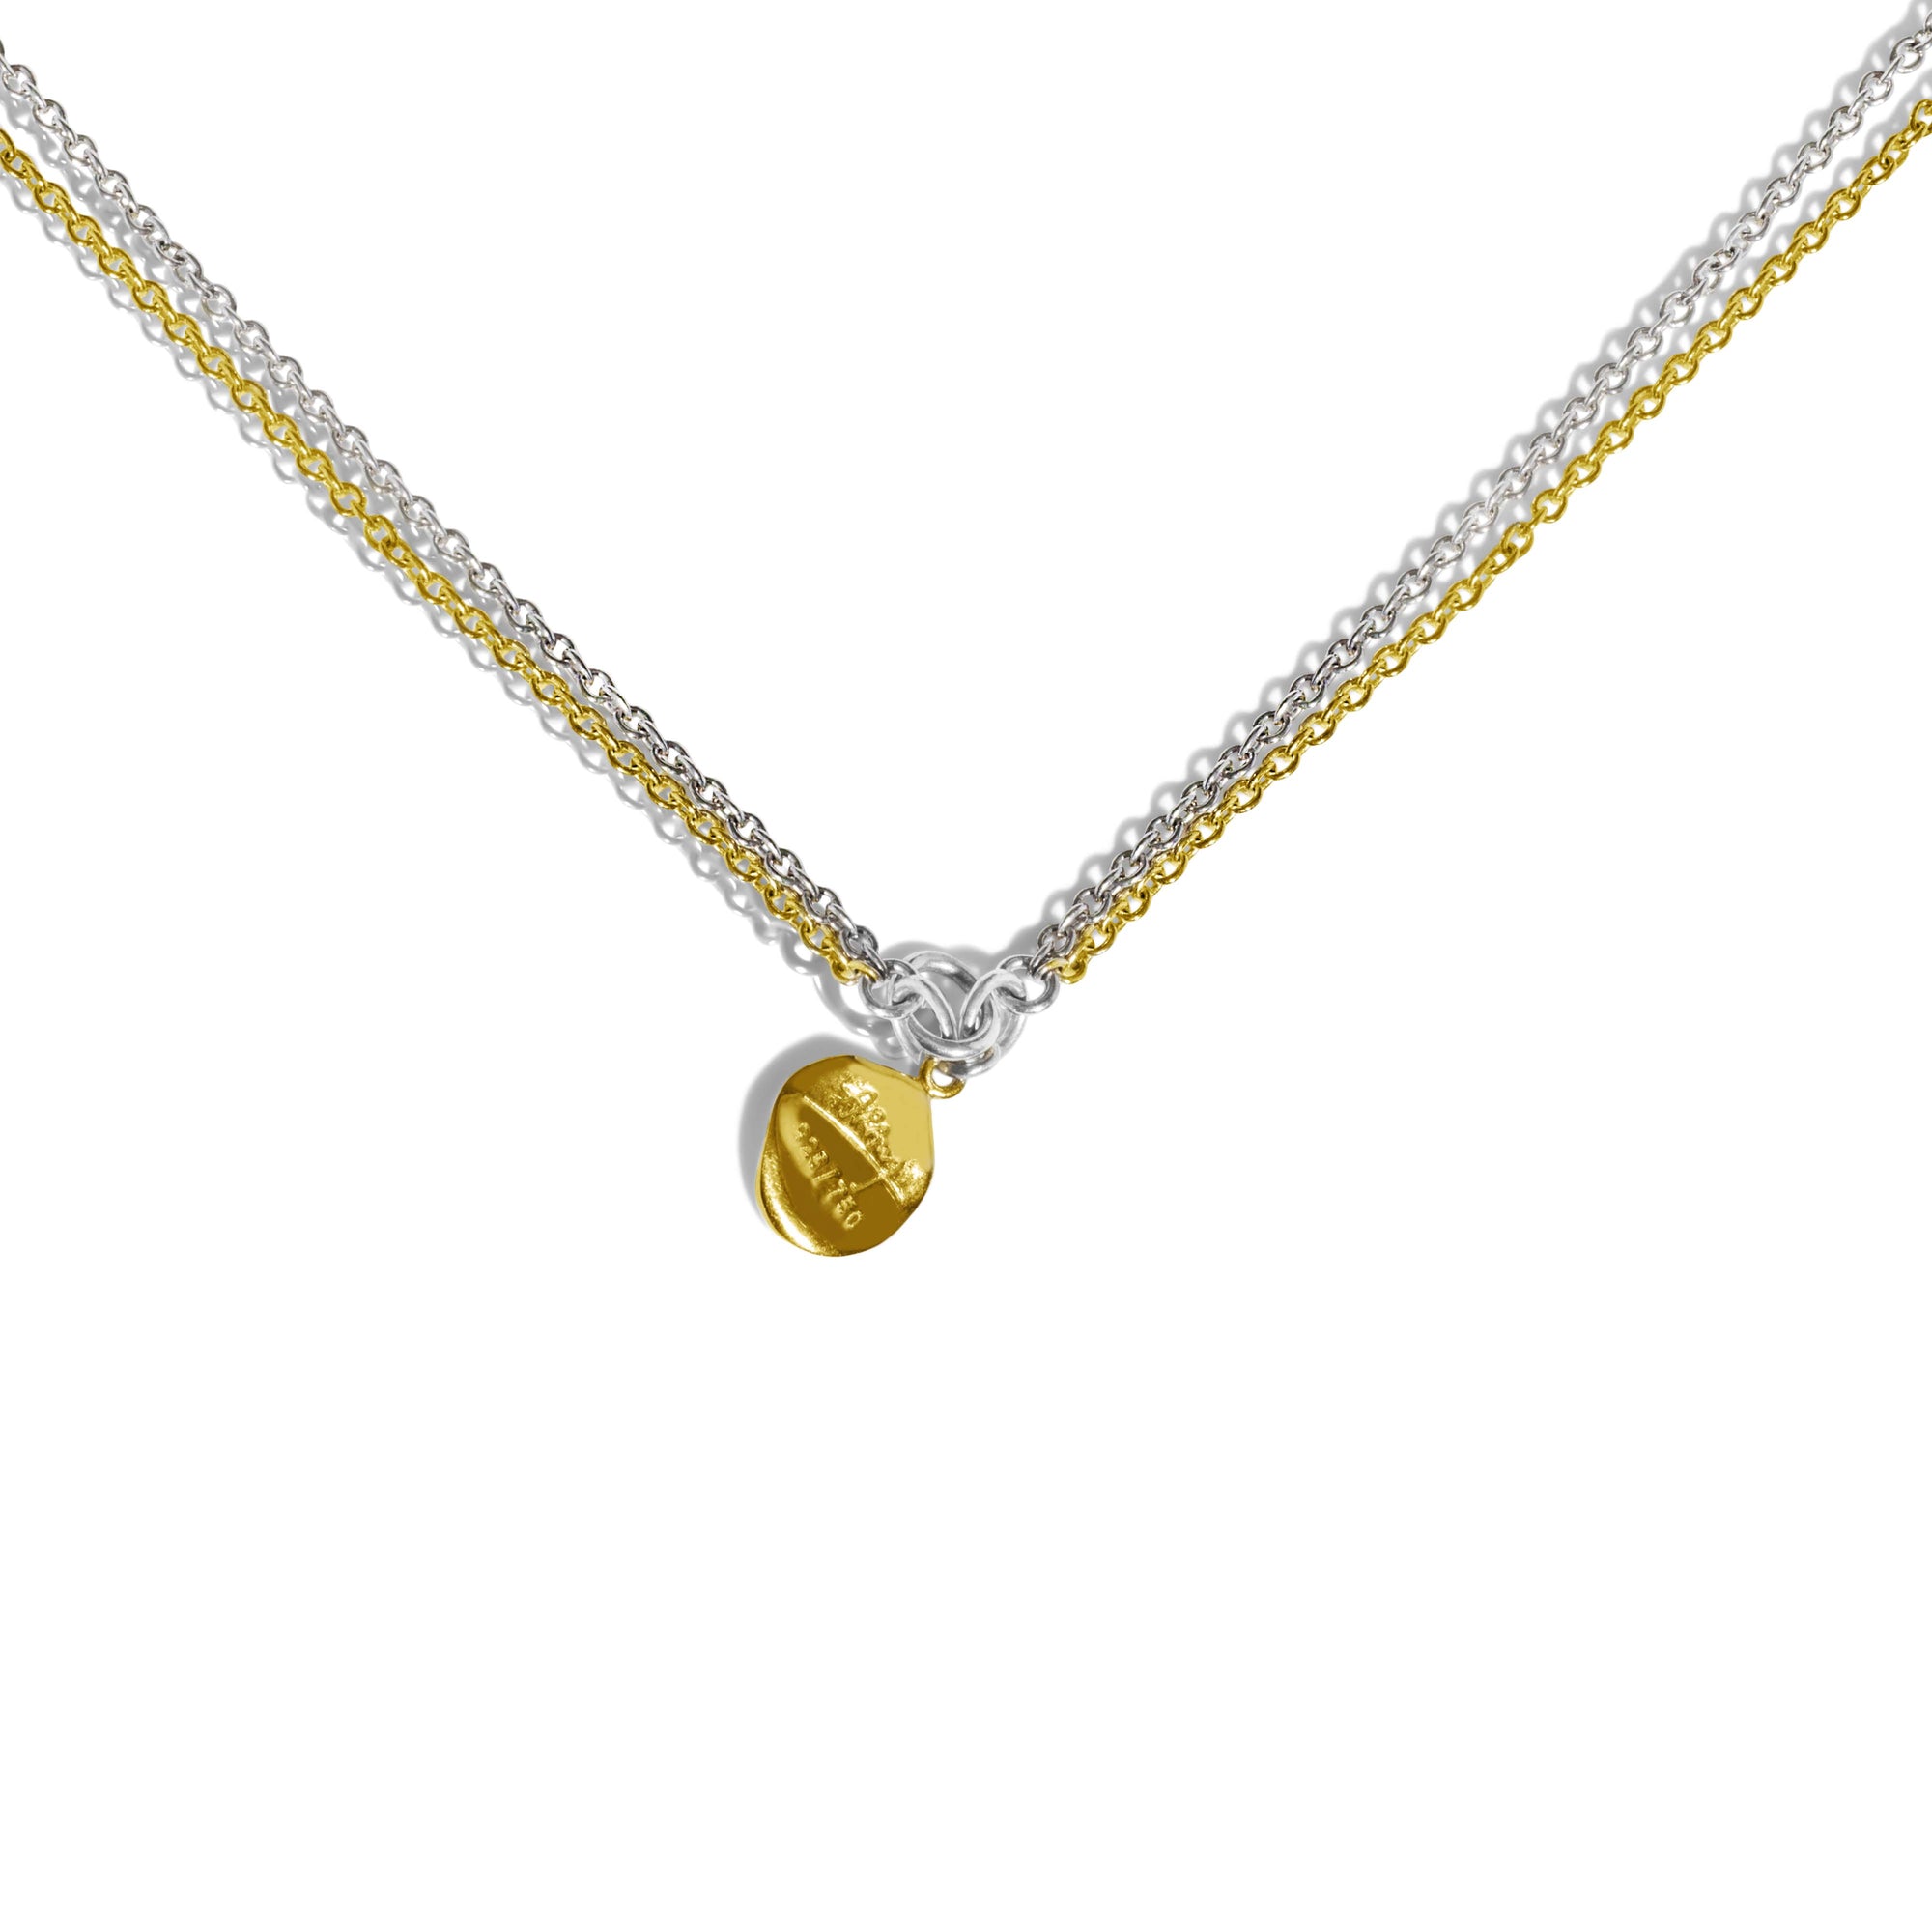 Michael Aram Dandelion Flower Pendant Necklace with Diamonds